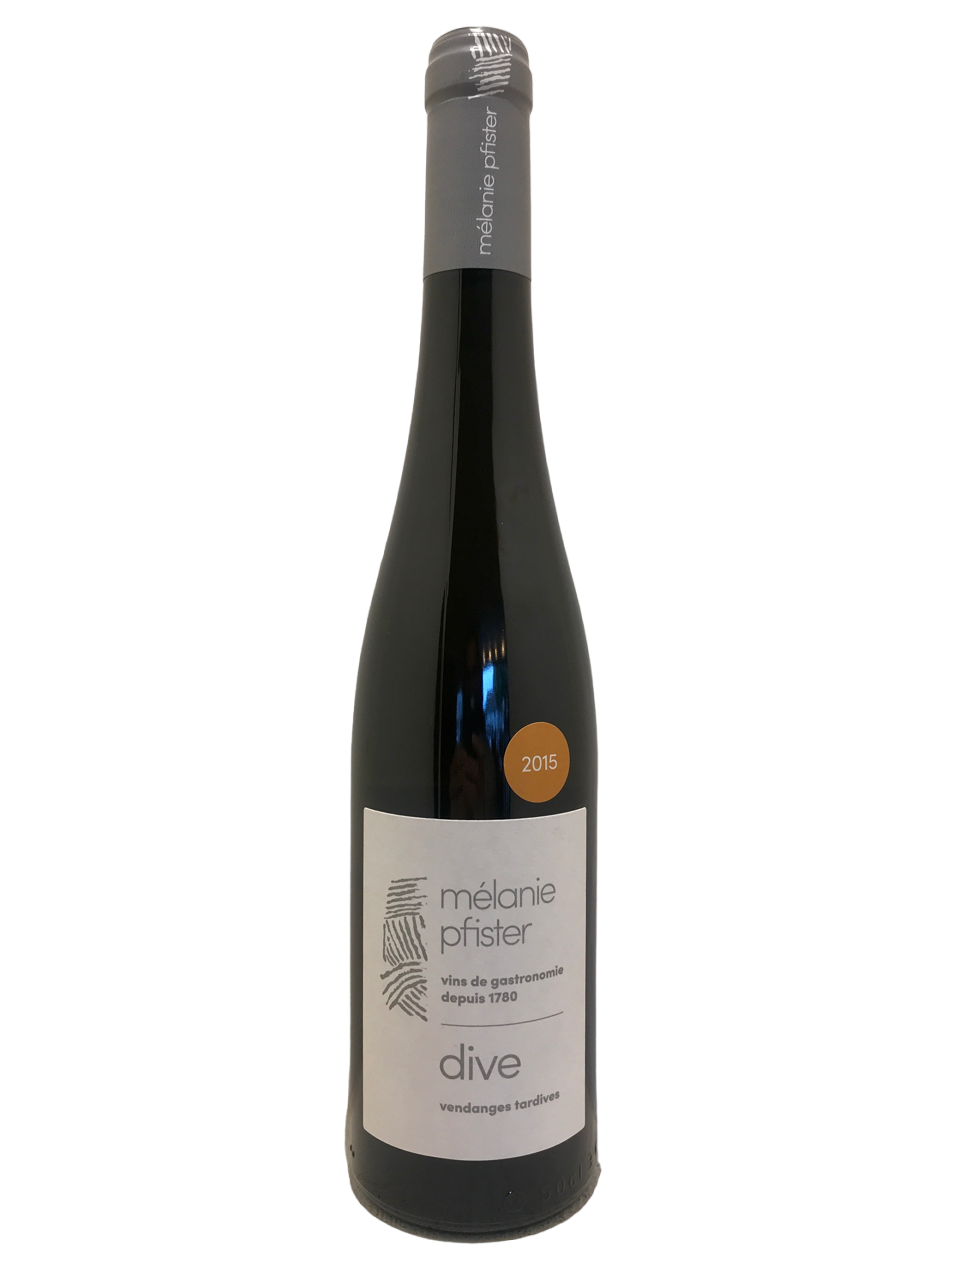 alsace wine vin mélanie pfister organic wine biodynamie riesling vendange tardive silberberg dive